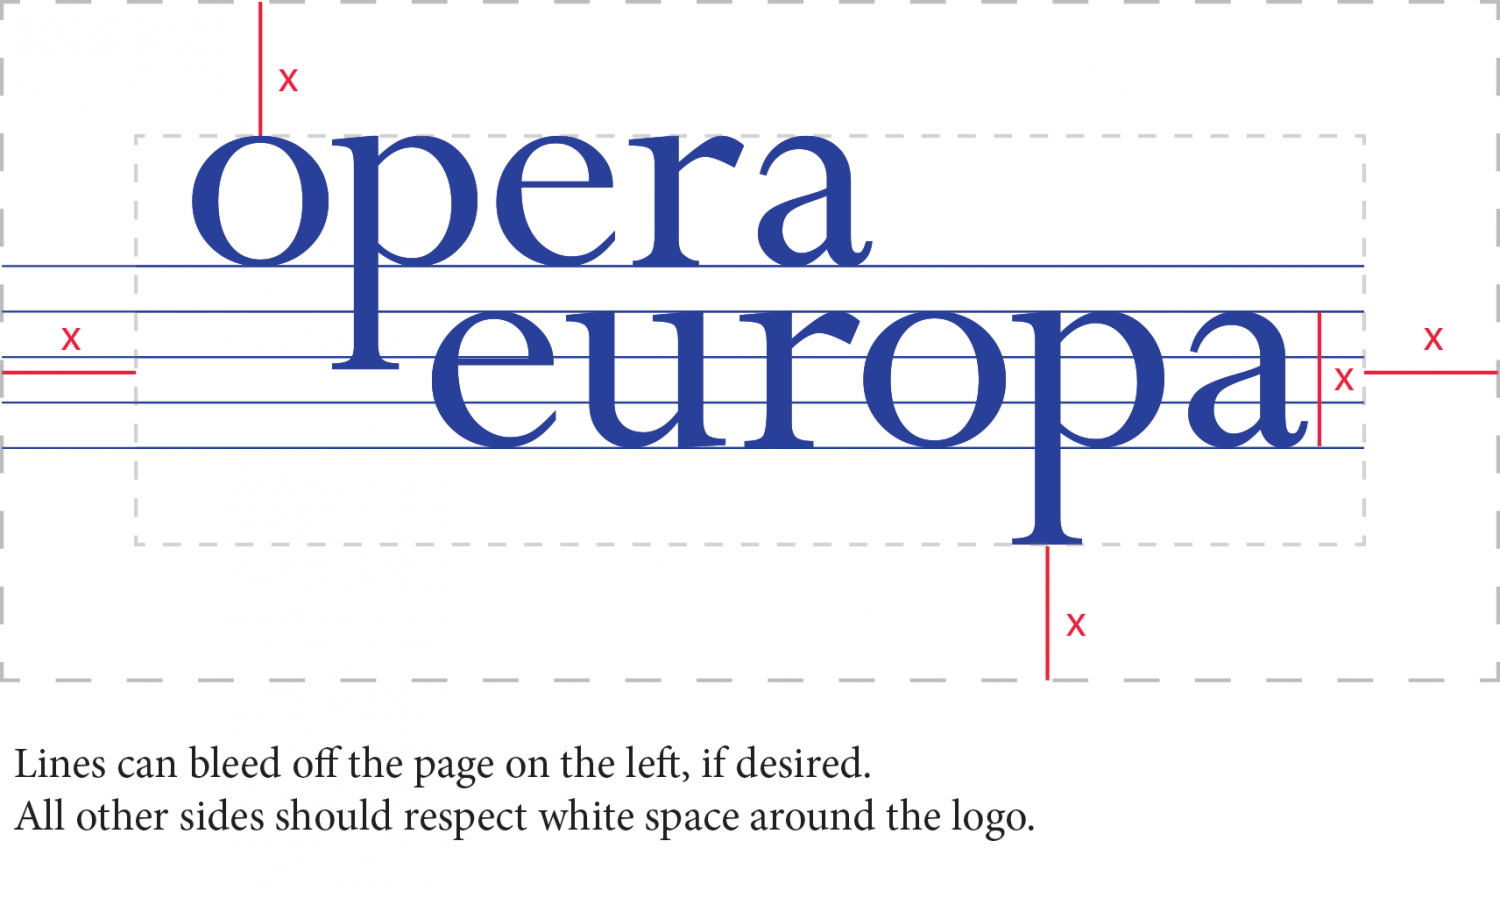 Opera All Logo - Opera Europa logos